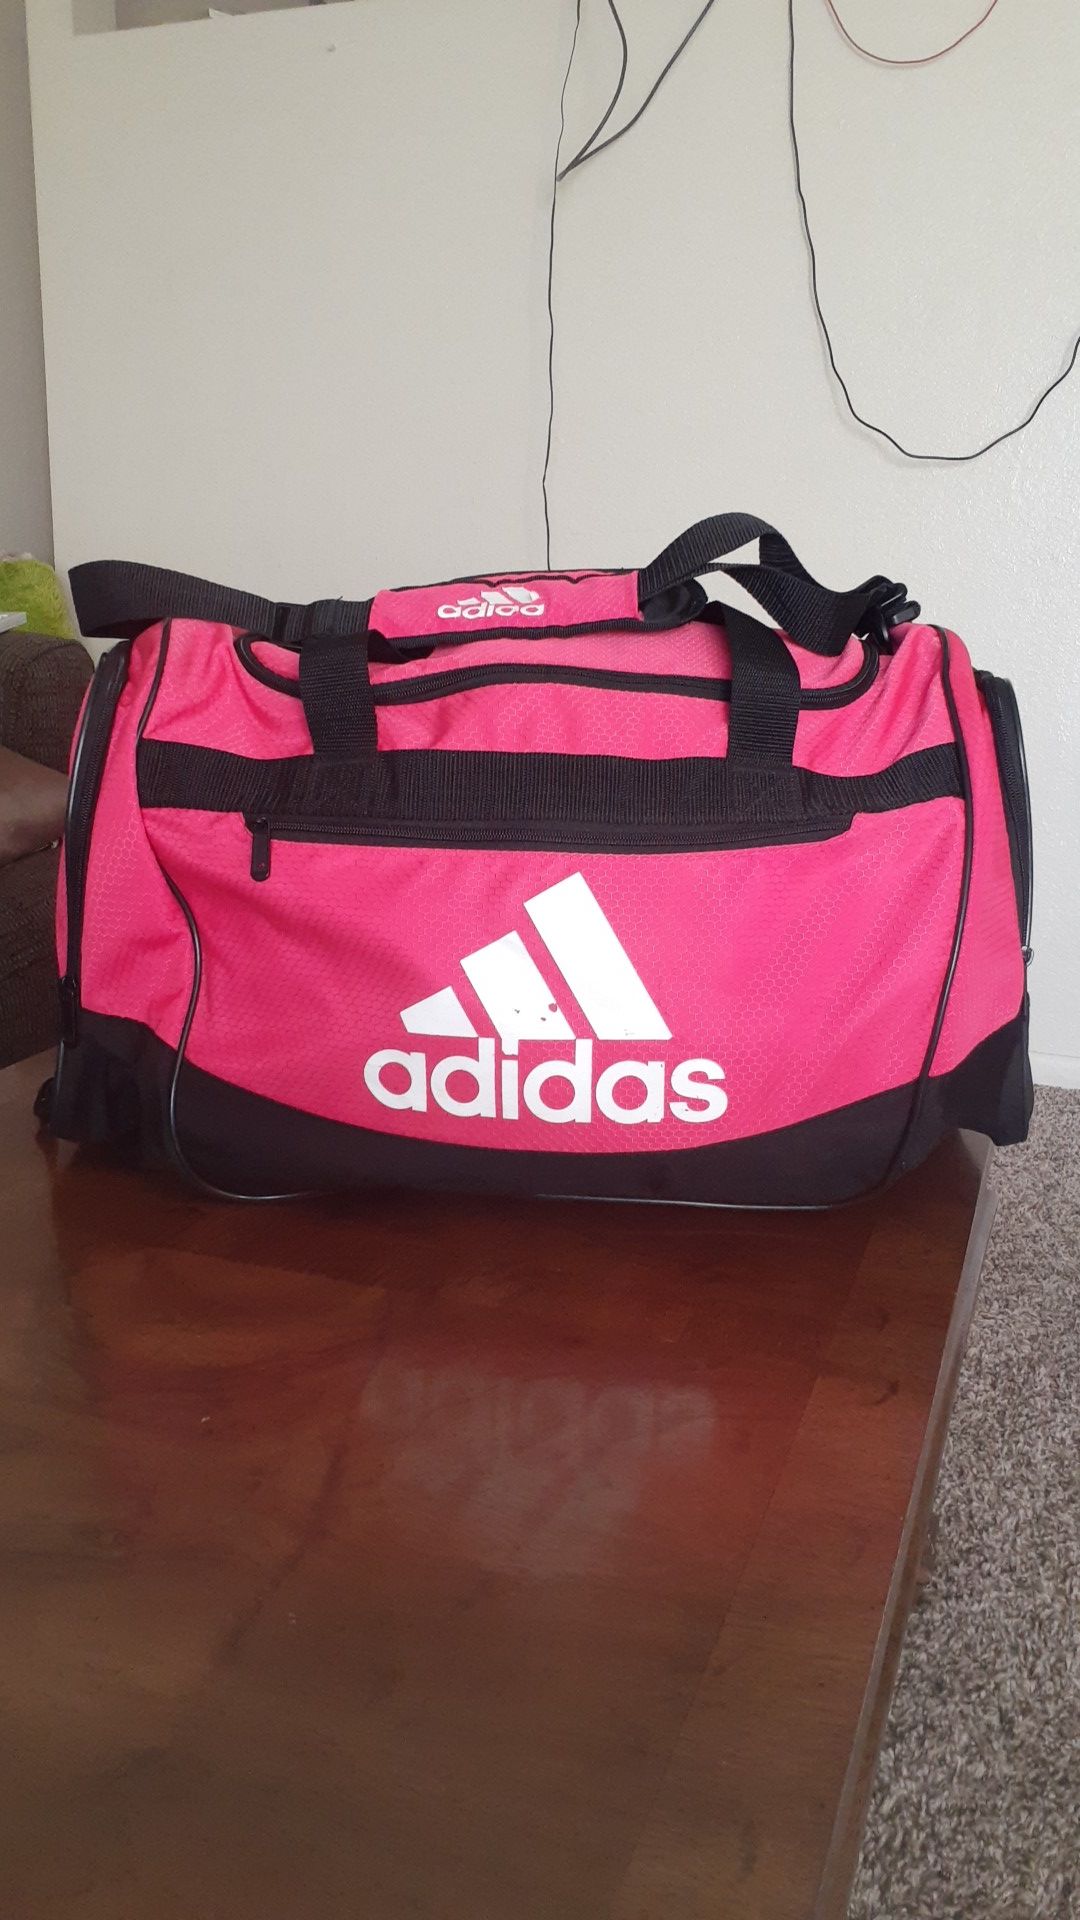 Adidas Sports Duffle Bag